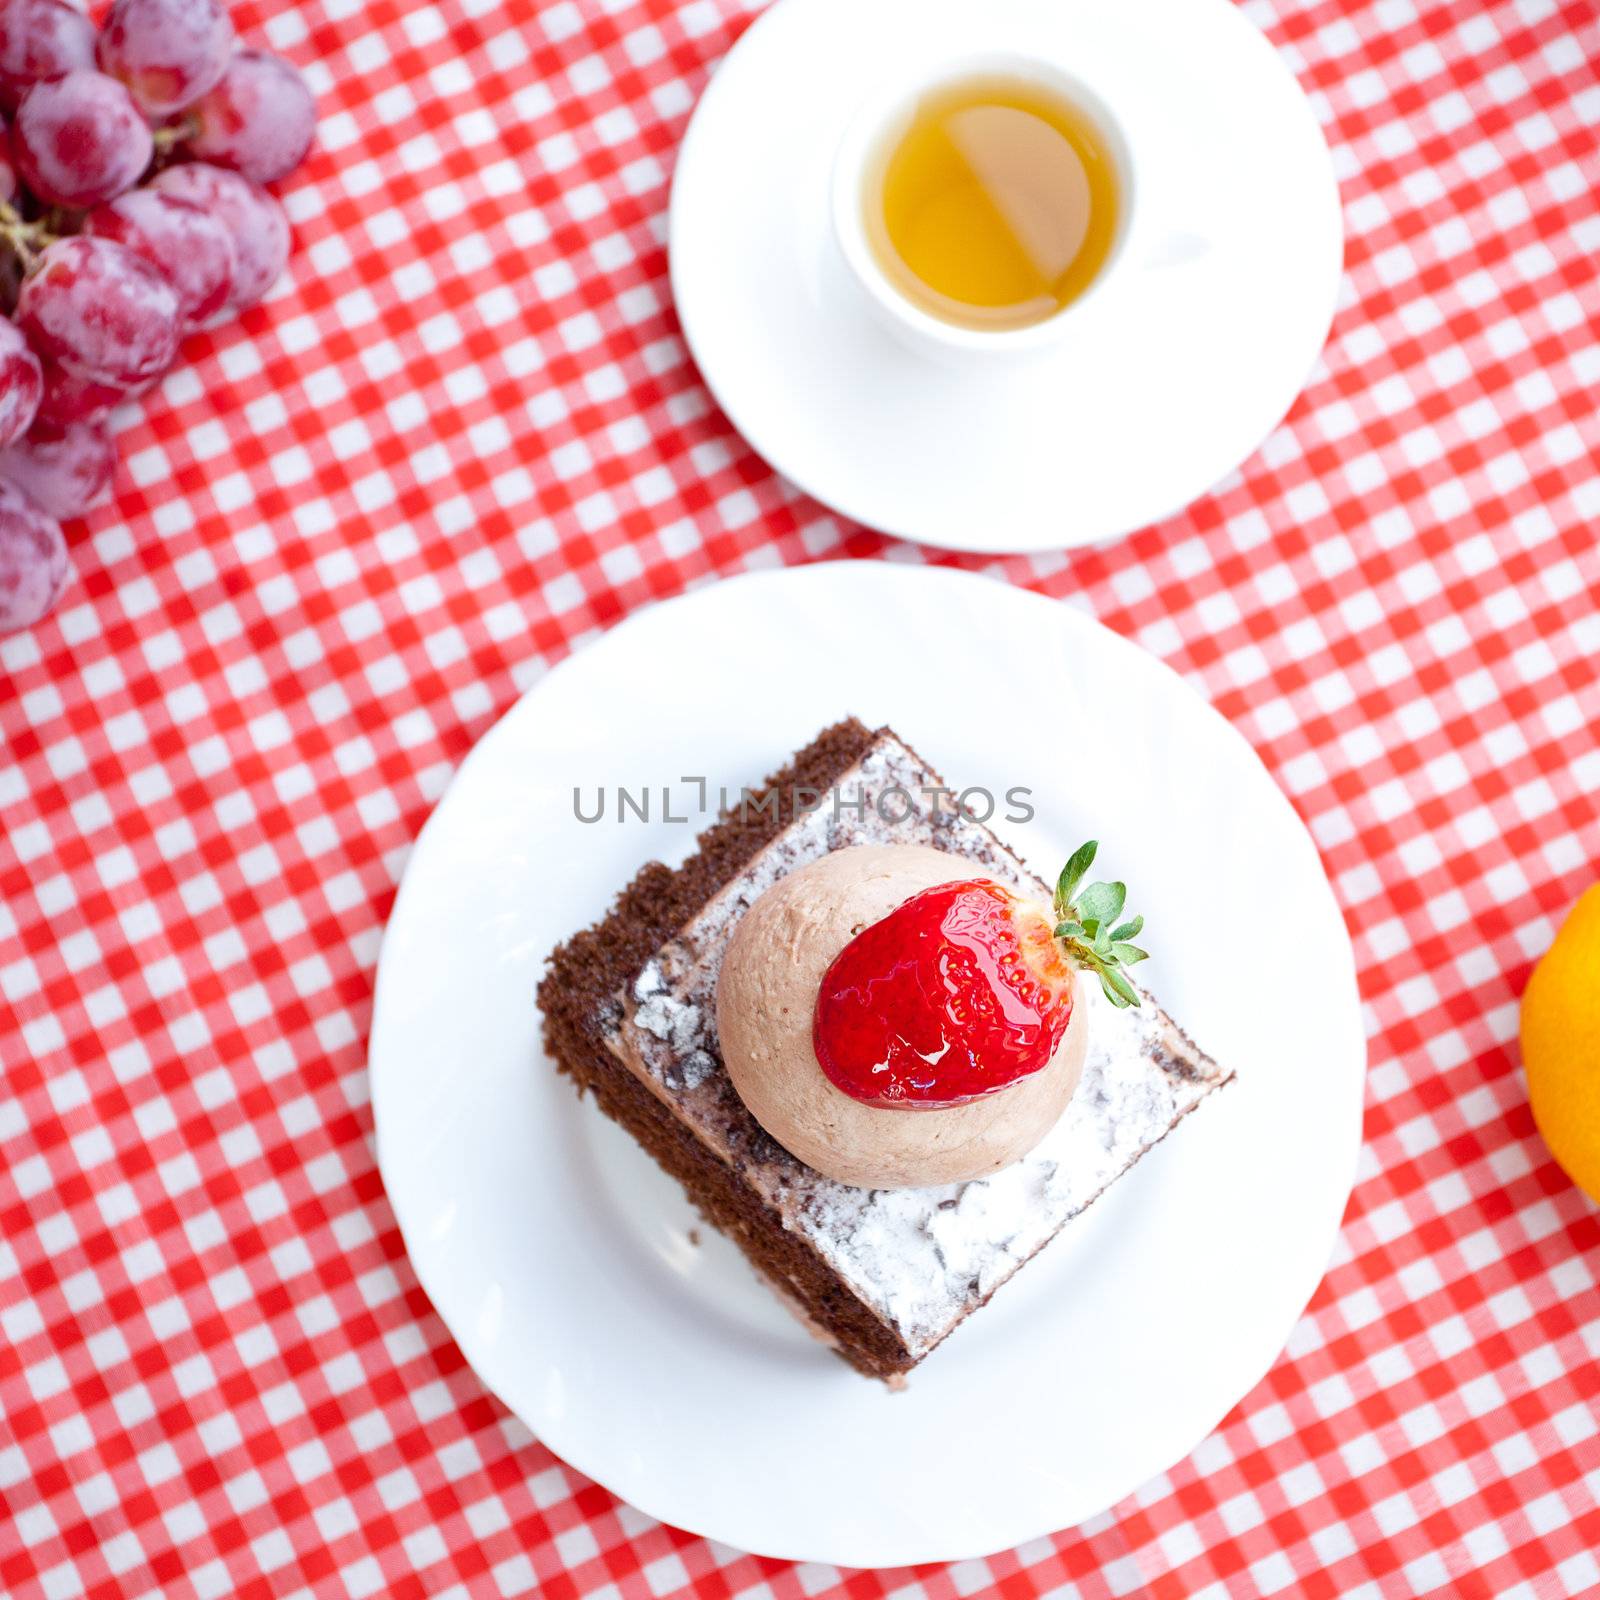 beautiful cake with strawberry,tangerine,grape and tea on plaid fabric